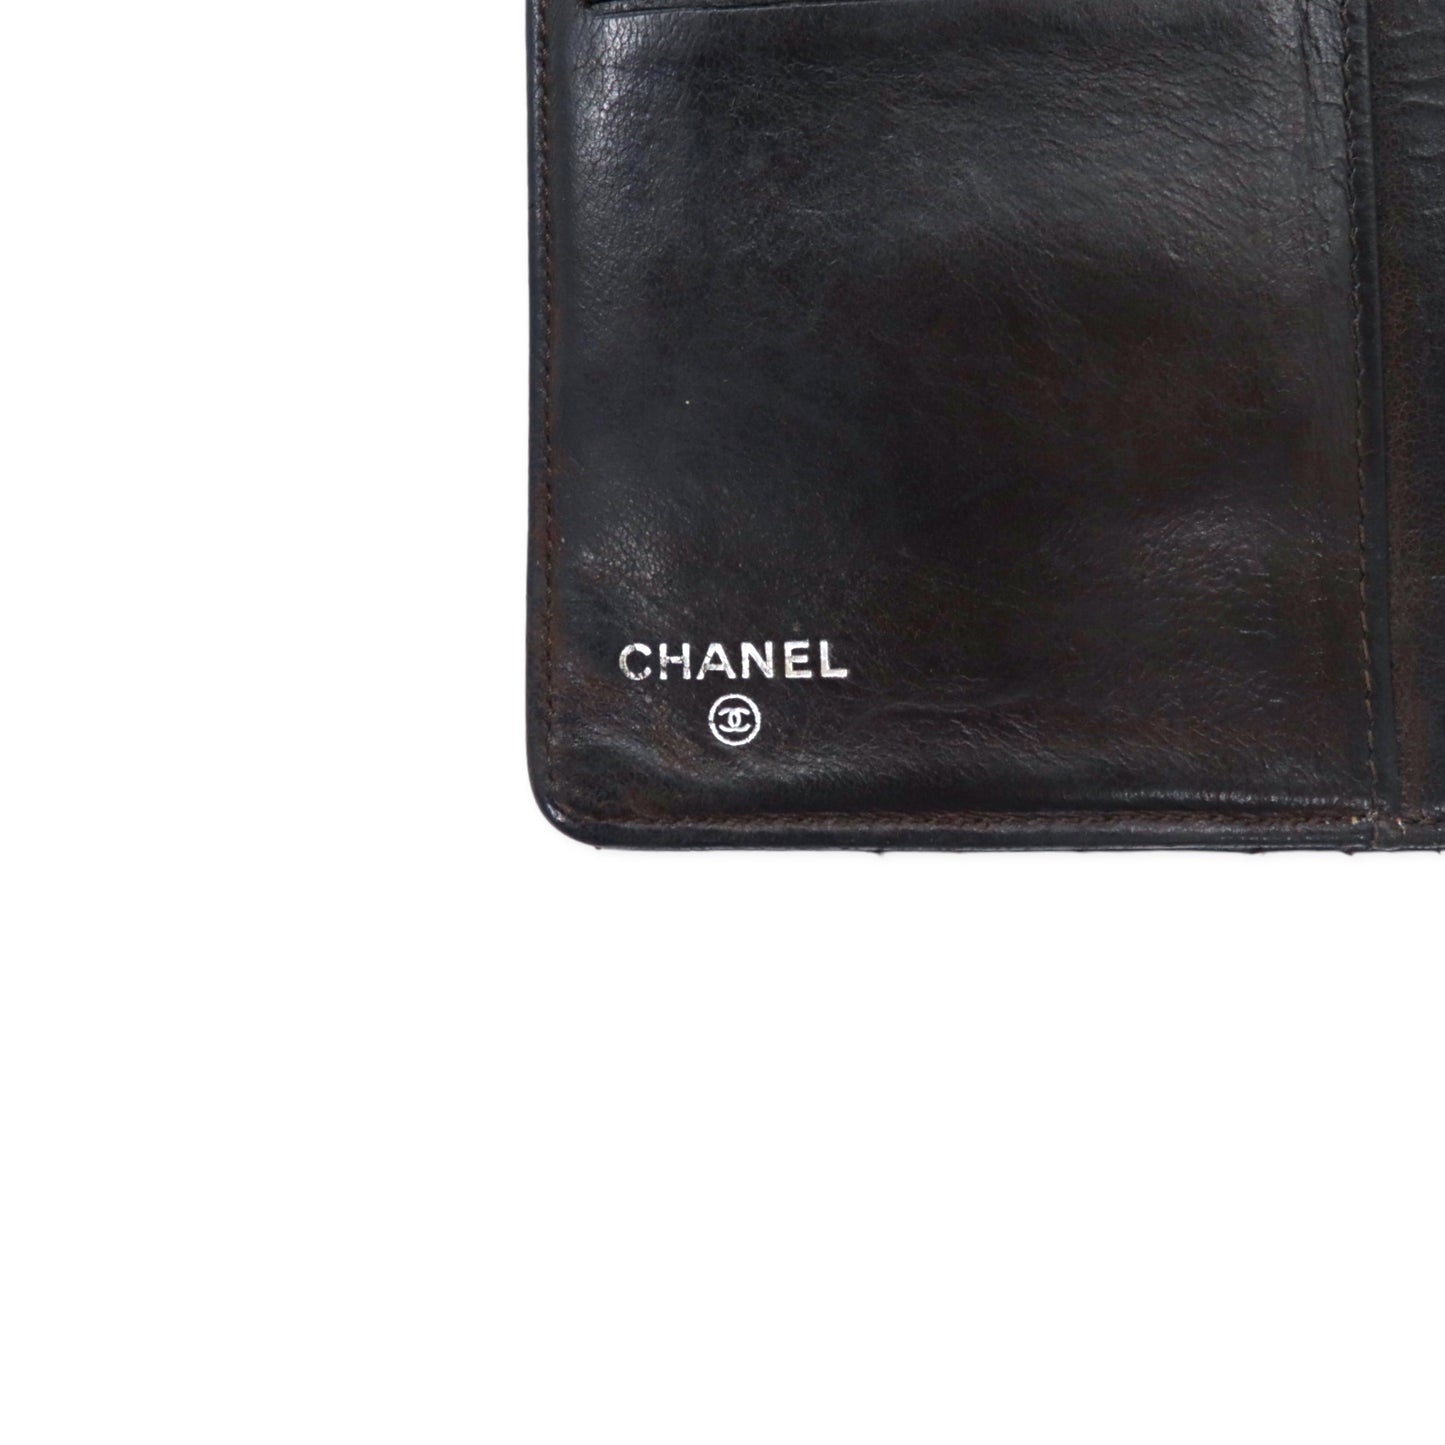 CHANEL 2.55ライン マトラッセ 長財布 ブラック レザー キルティング フランス製